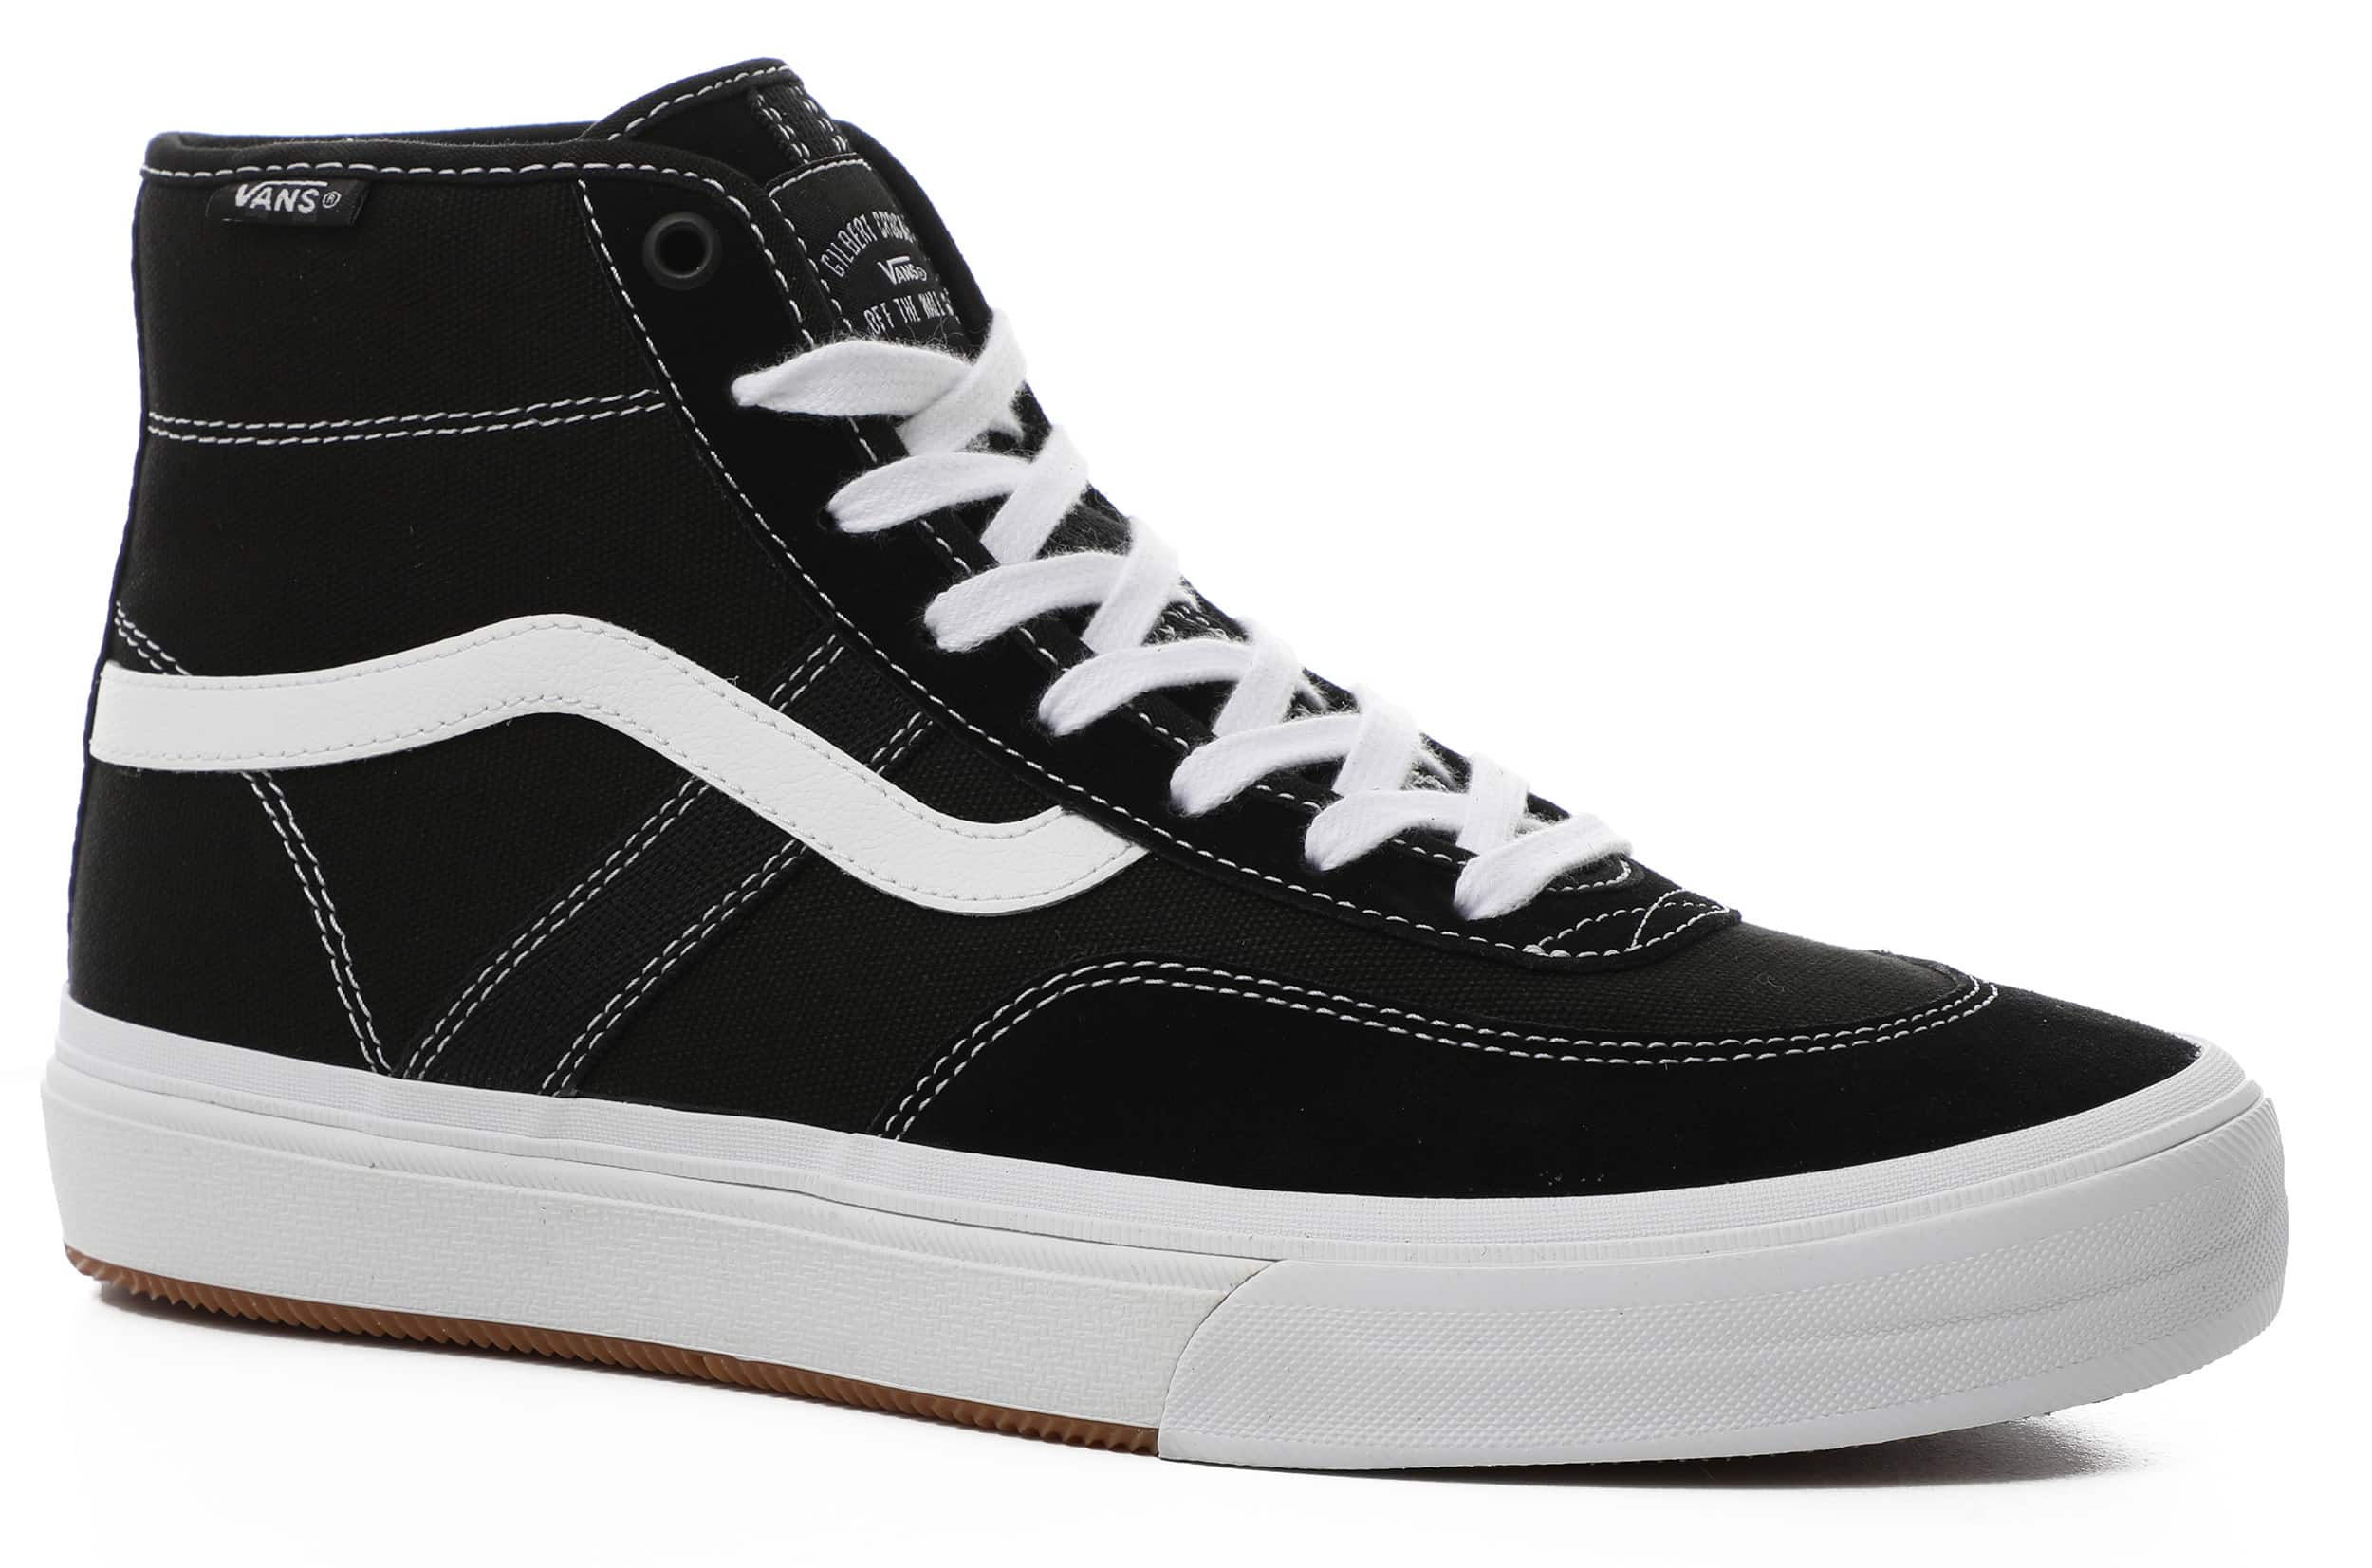 Vans Crockett Pro High Top Skate Shoes - black/white | Tactics